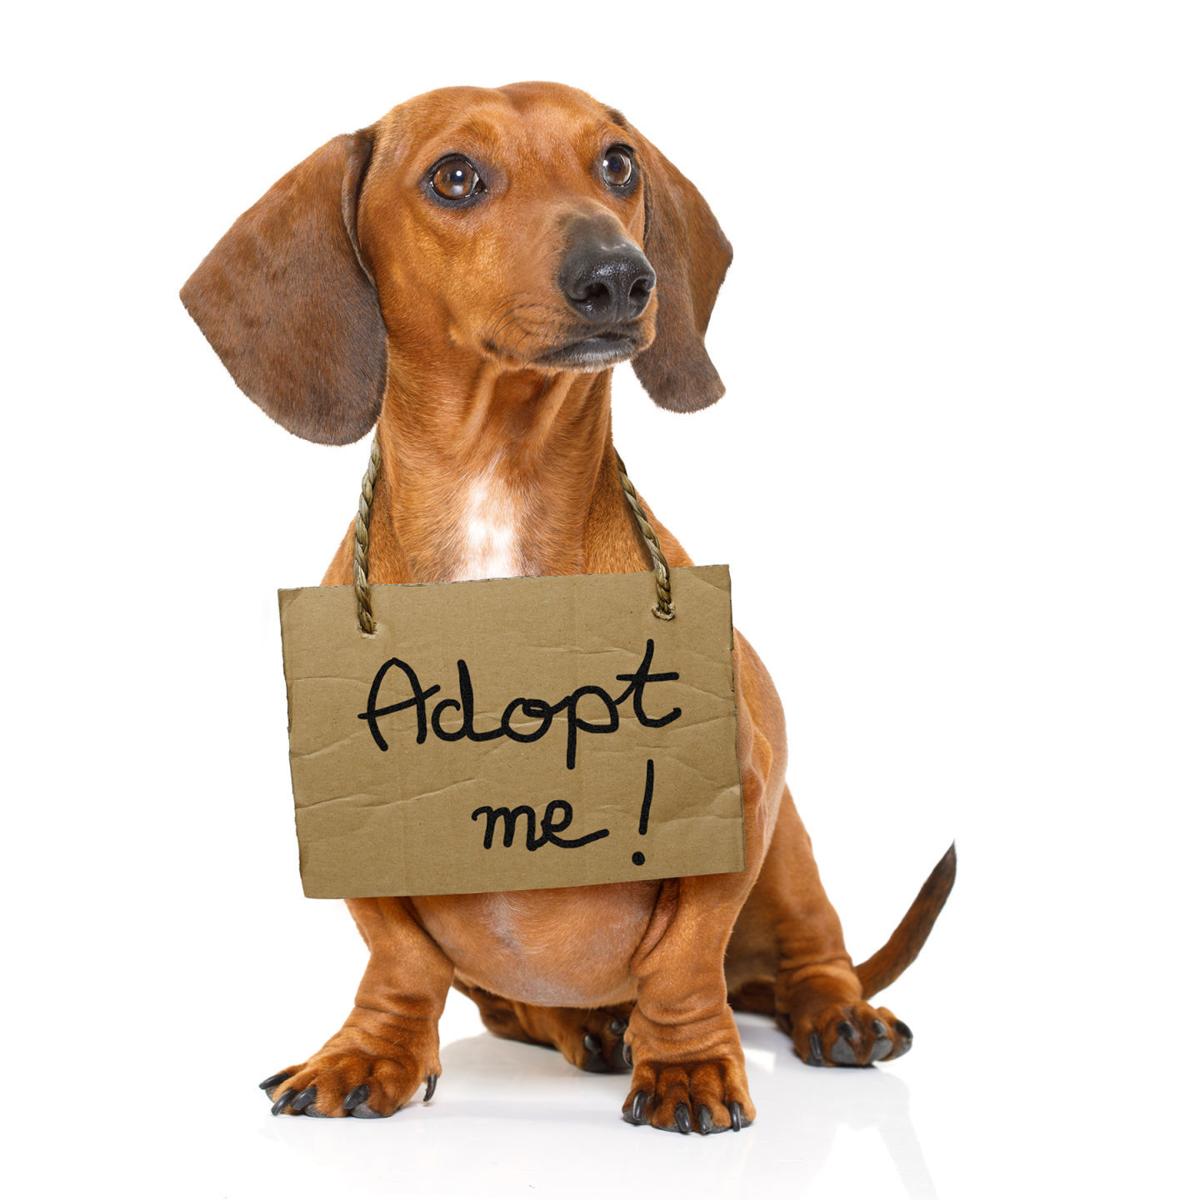 20 Best Pictures Free Pet Adoption Denver : 9news.com | Are you ready to adopt a pet? Expert advice ...